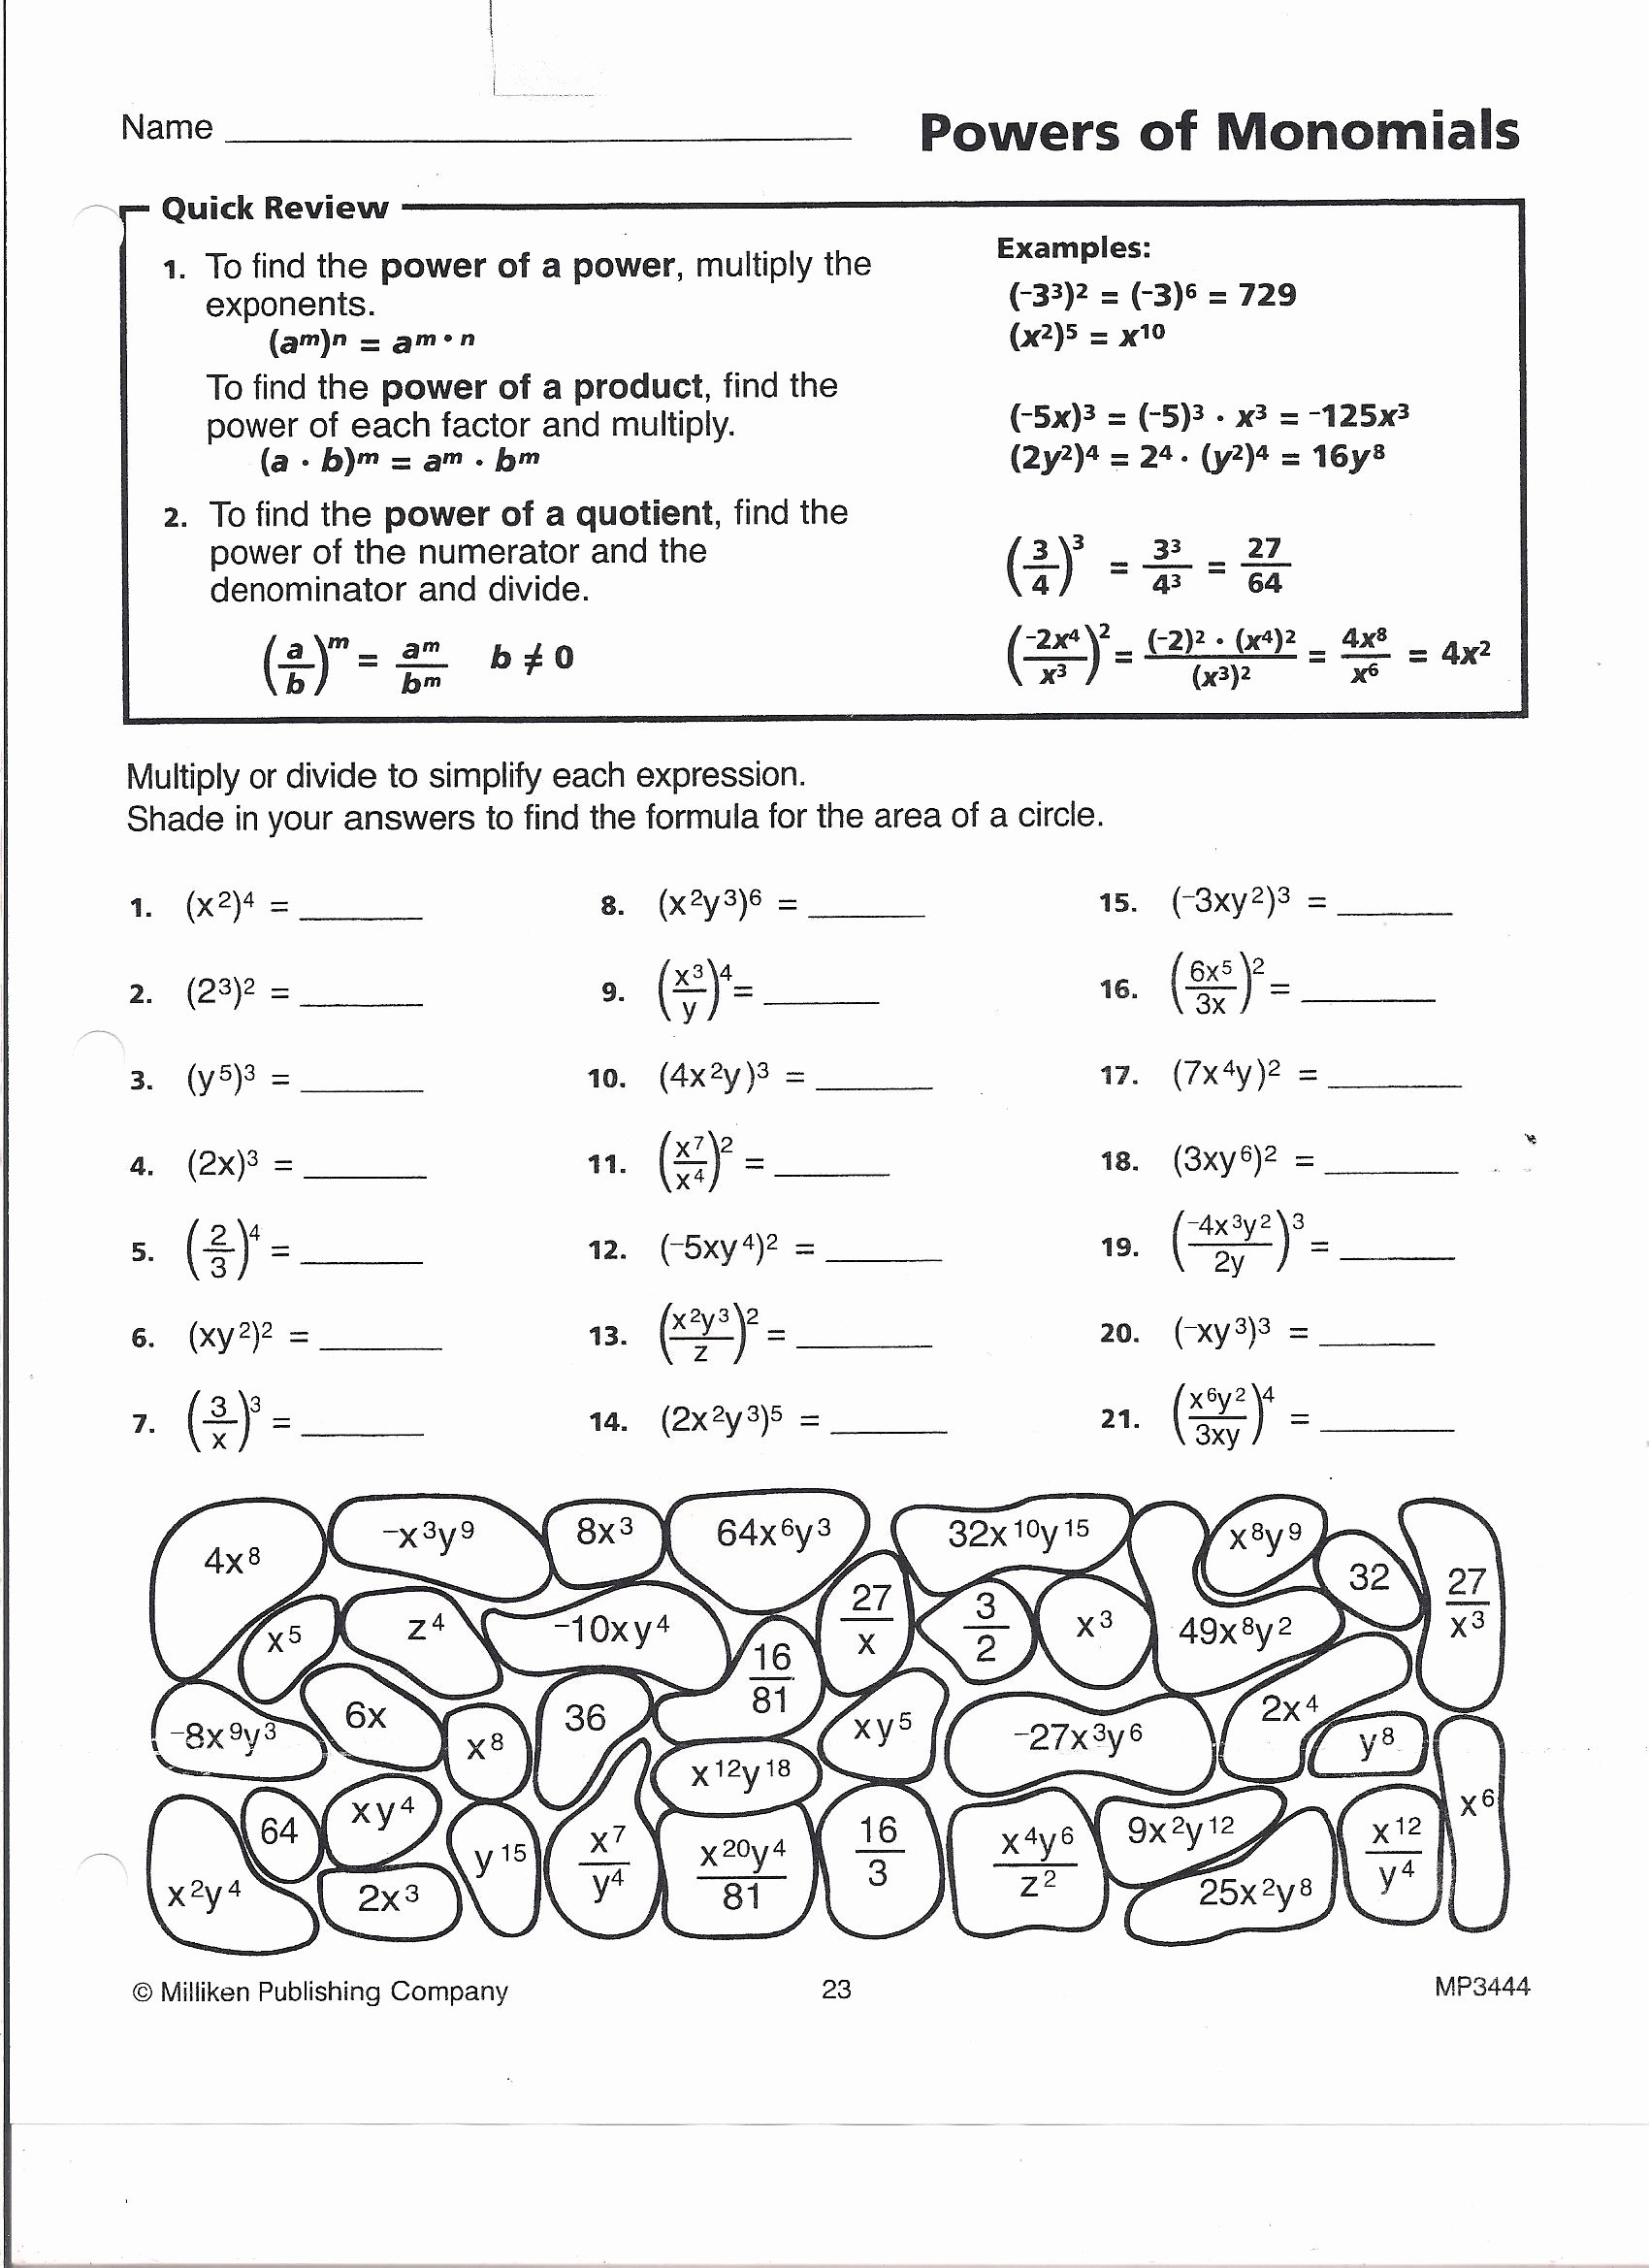 Multiplying and Dividing Monomials Worksheet Lovely Powers Monomials Worksheet Answers Worksheets for Kids